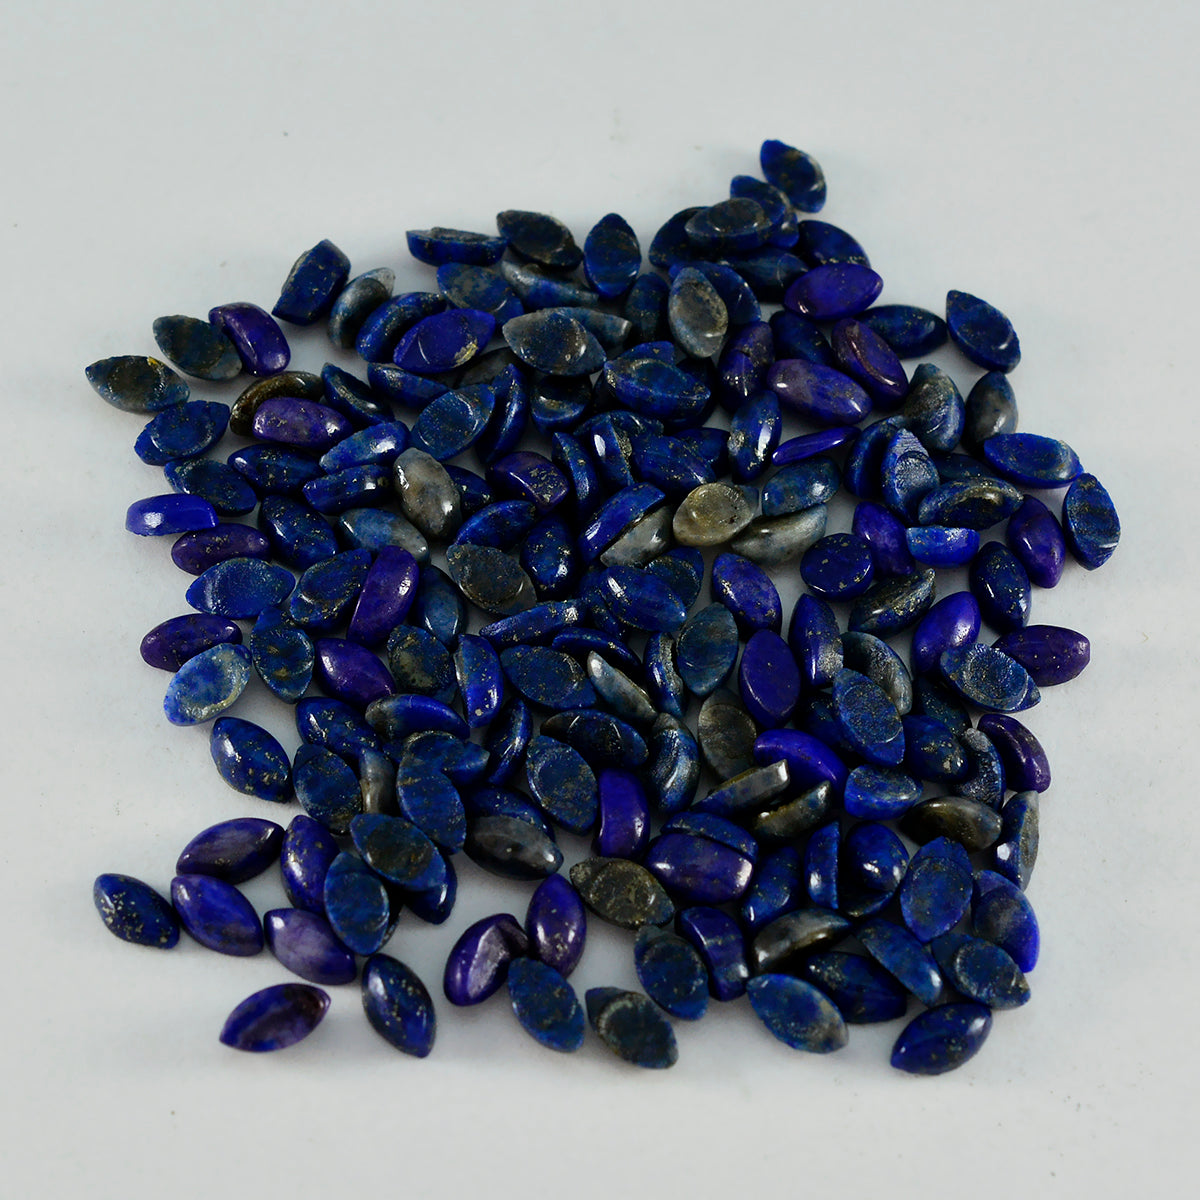 riyogems 1pc ブルー ラピスラズリ カボション 3x6 mm マーキス形状の見栄えの良い品質のルース宝石